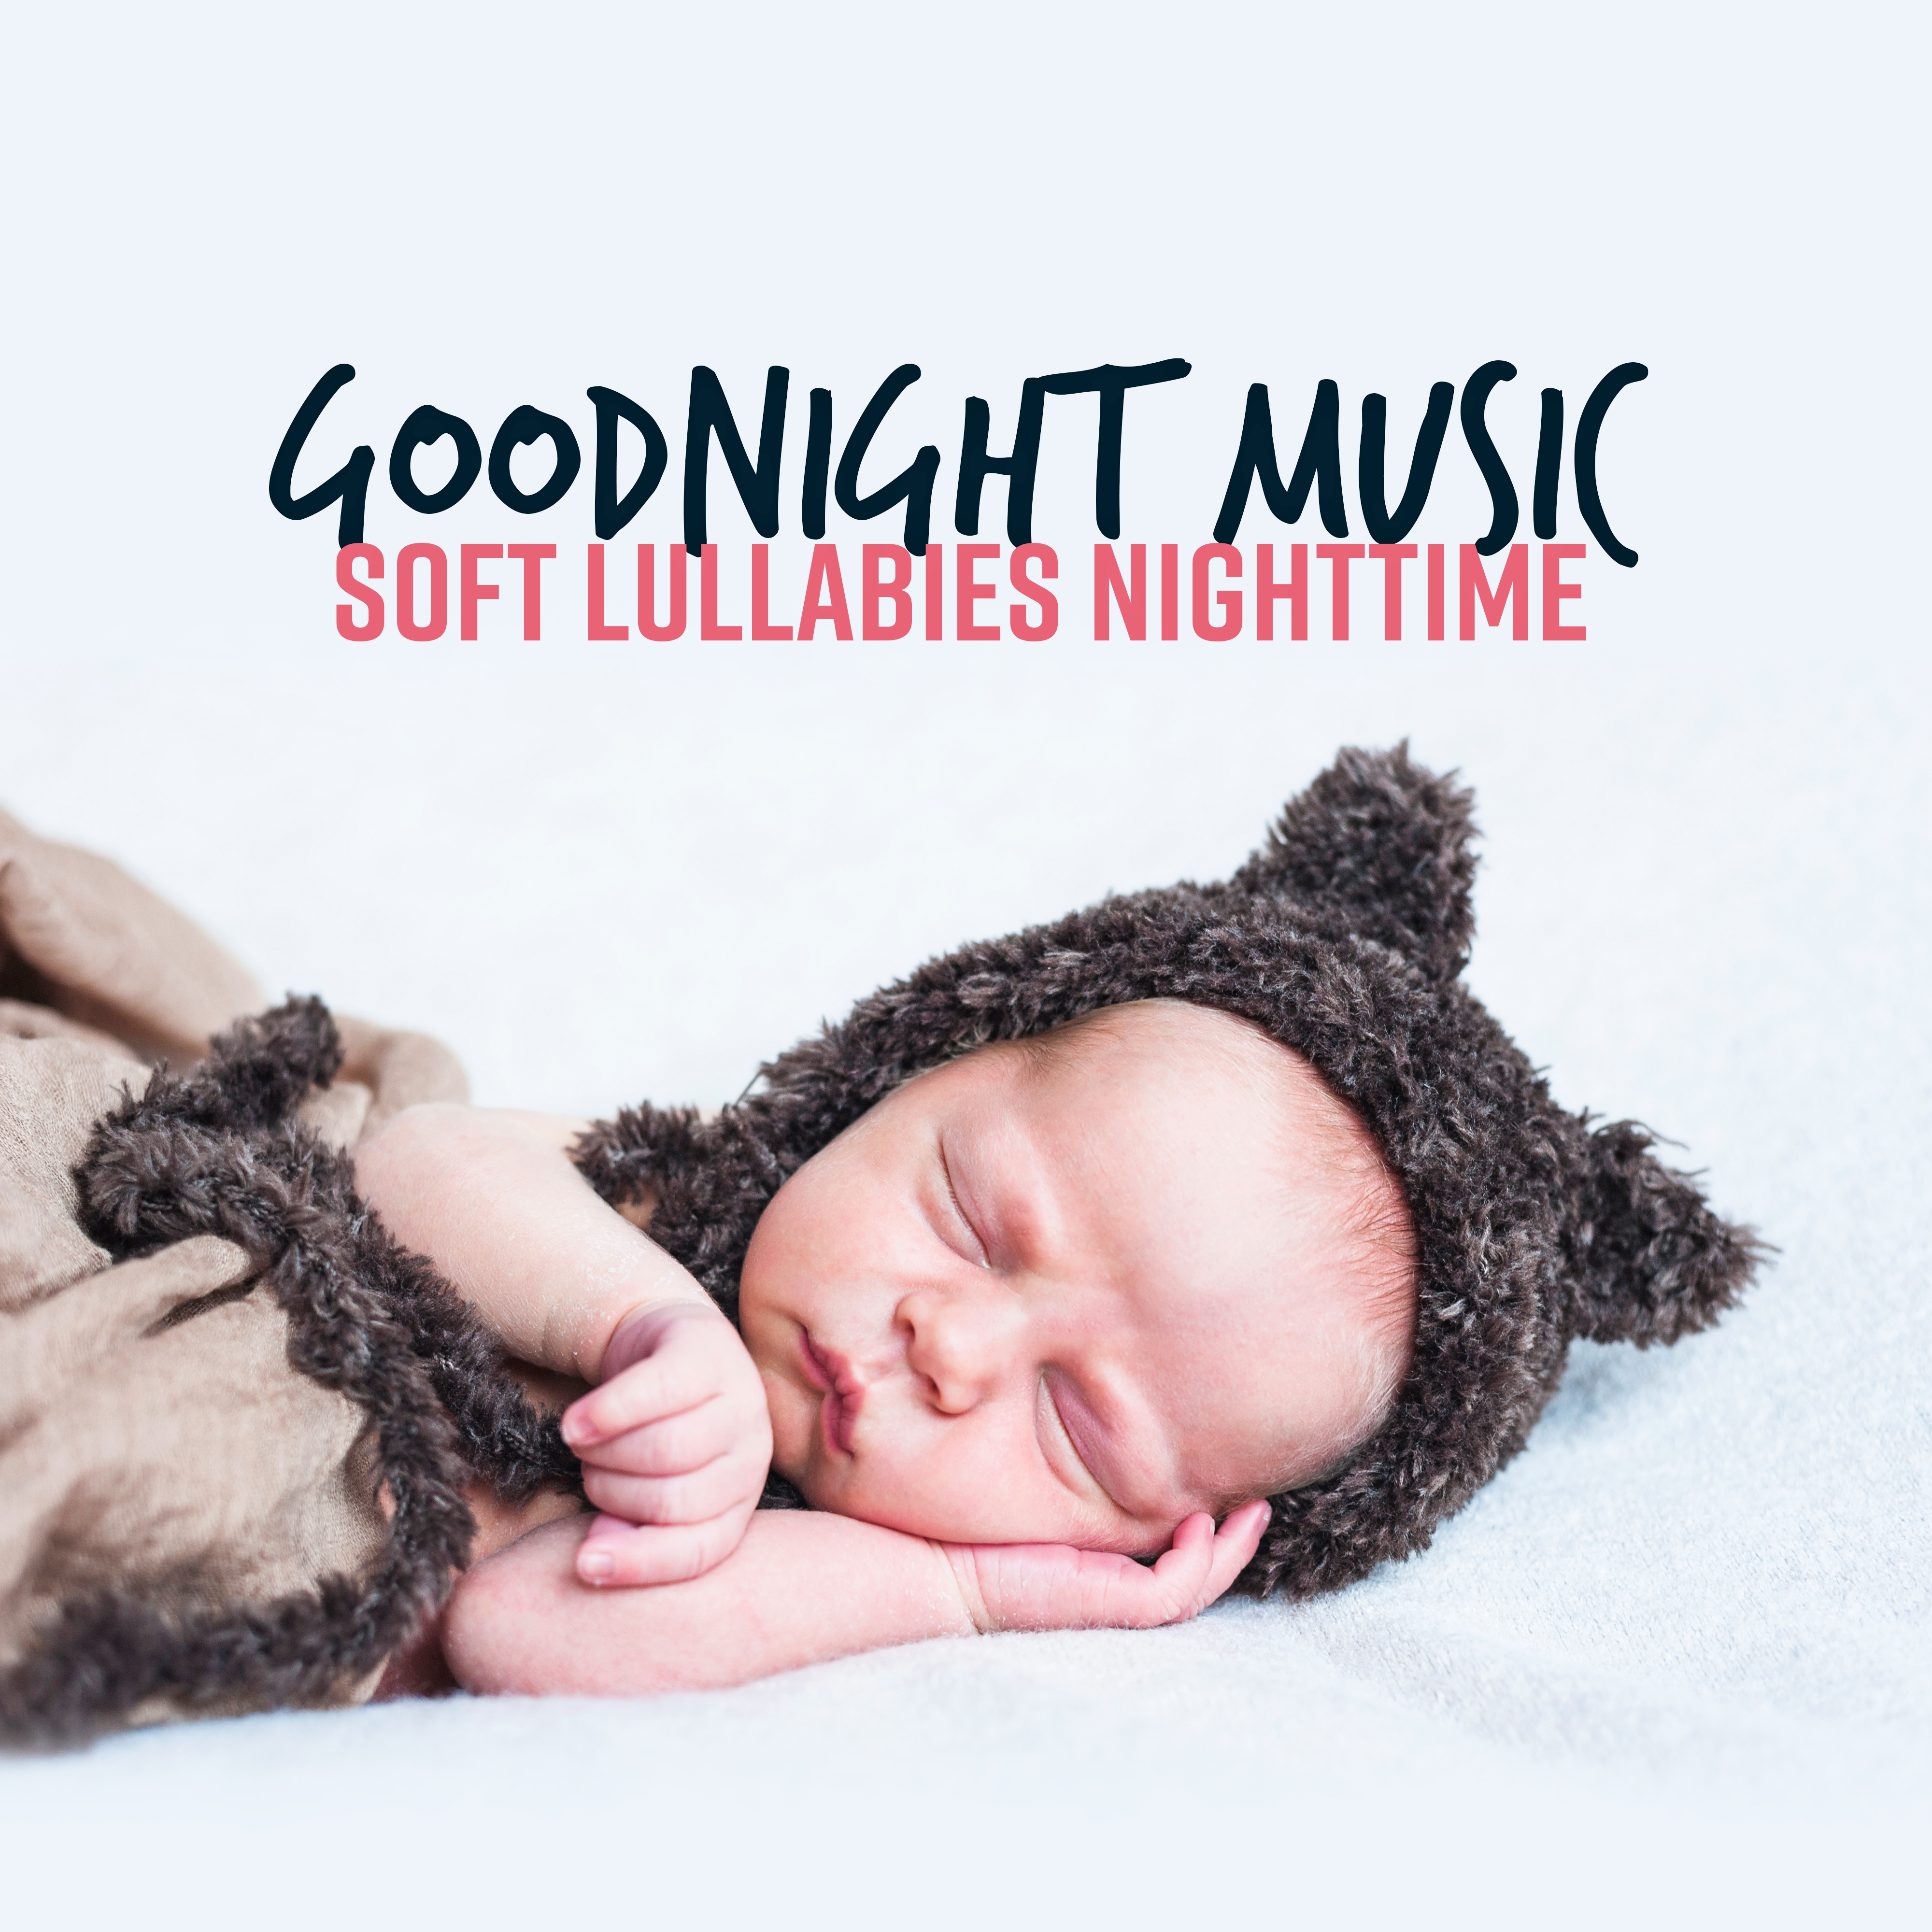 Goodnight Music: Soft Lullabies Nighttime